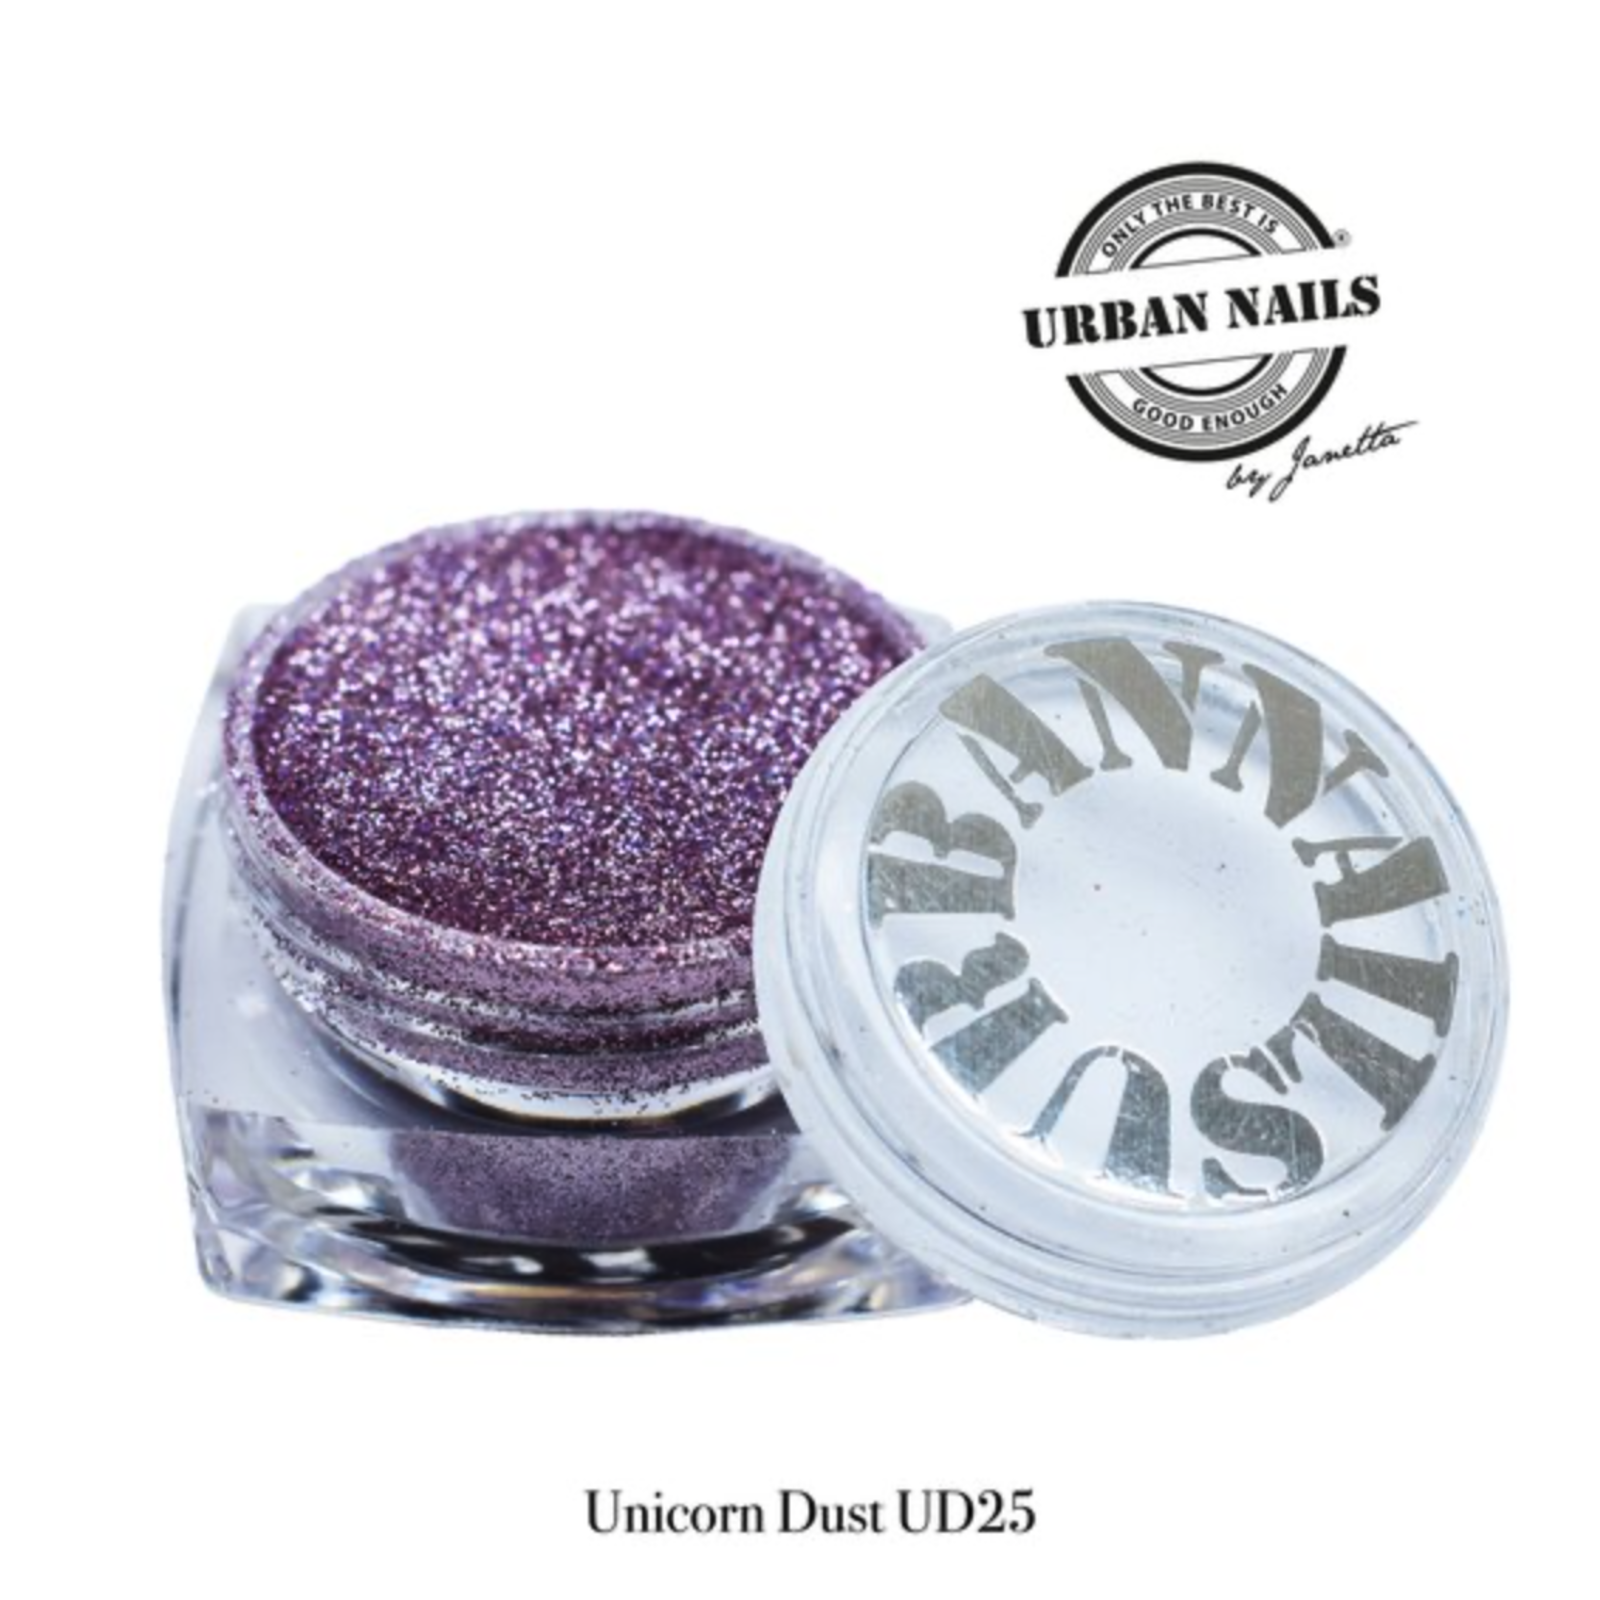 Urban nails Unicorn Dust UD25